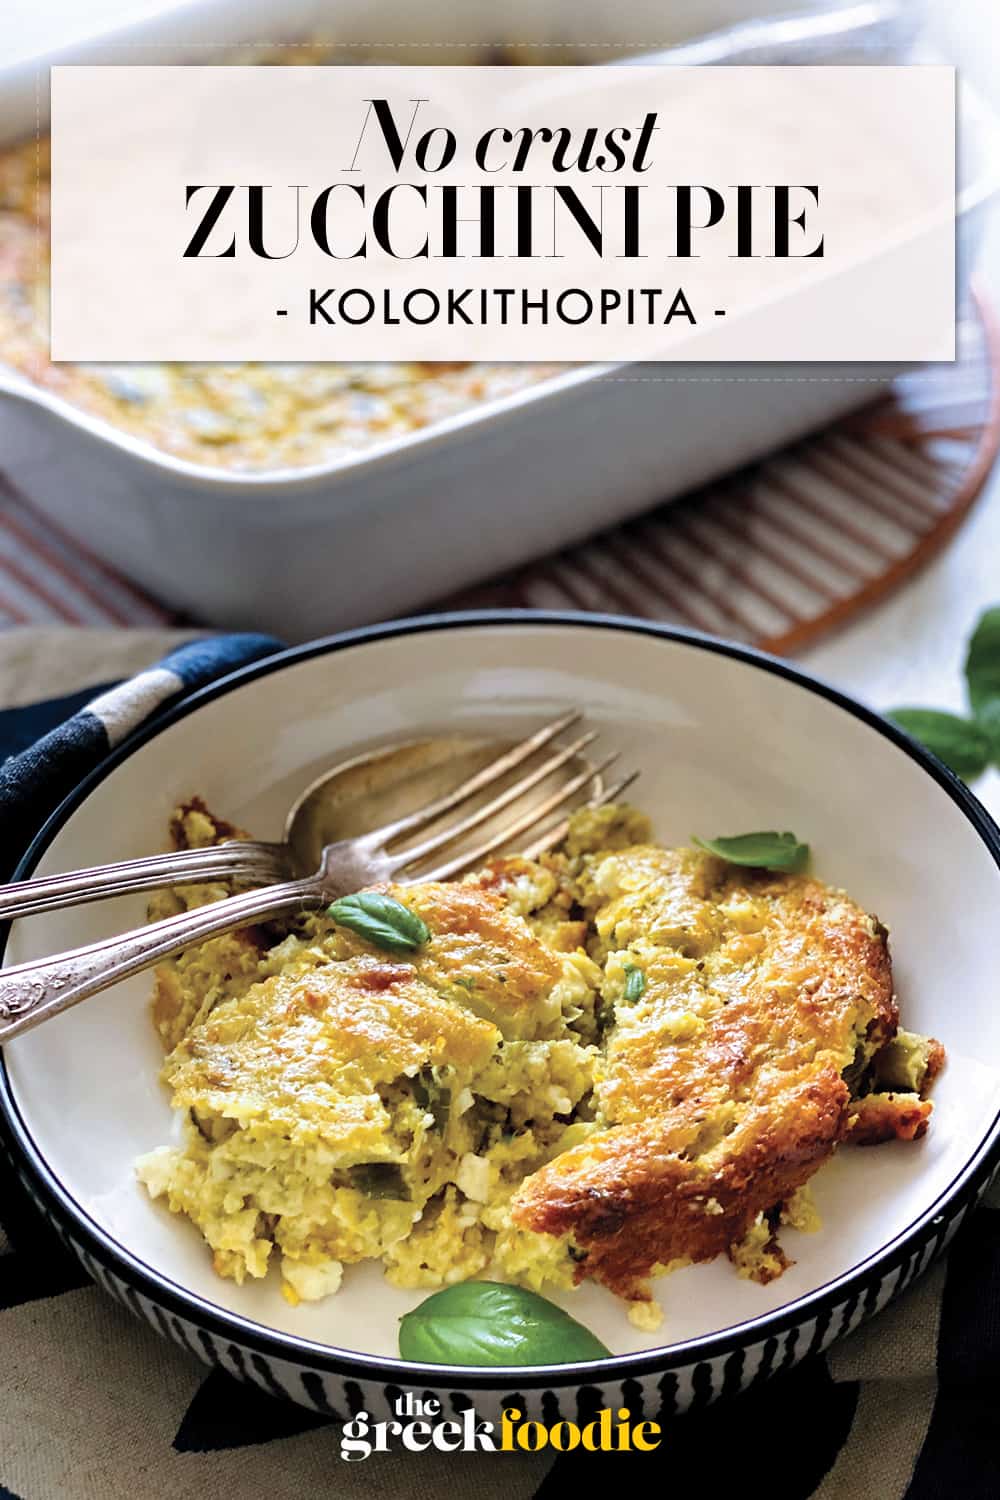 Greek No Crust Zucchini Pie - Kolokithopita